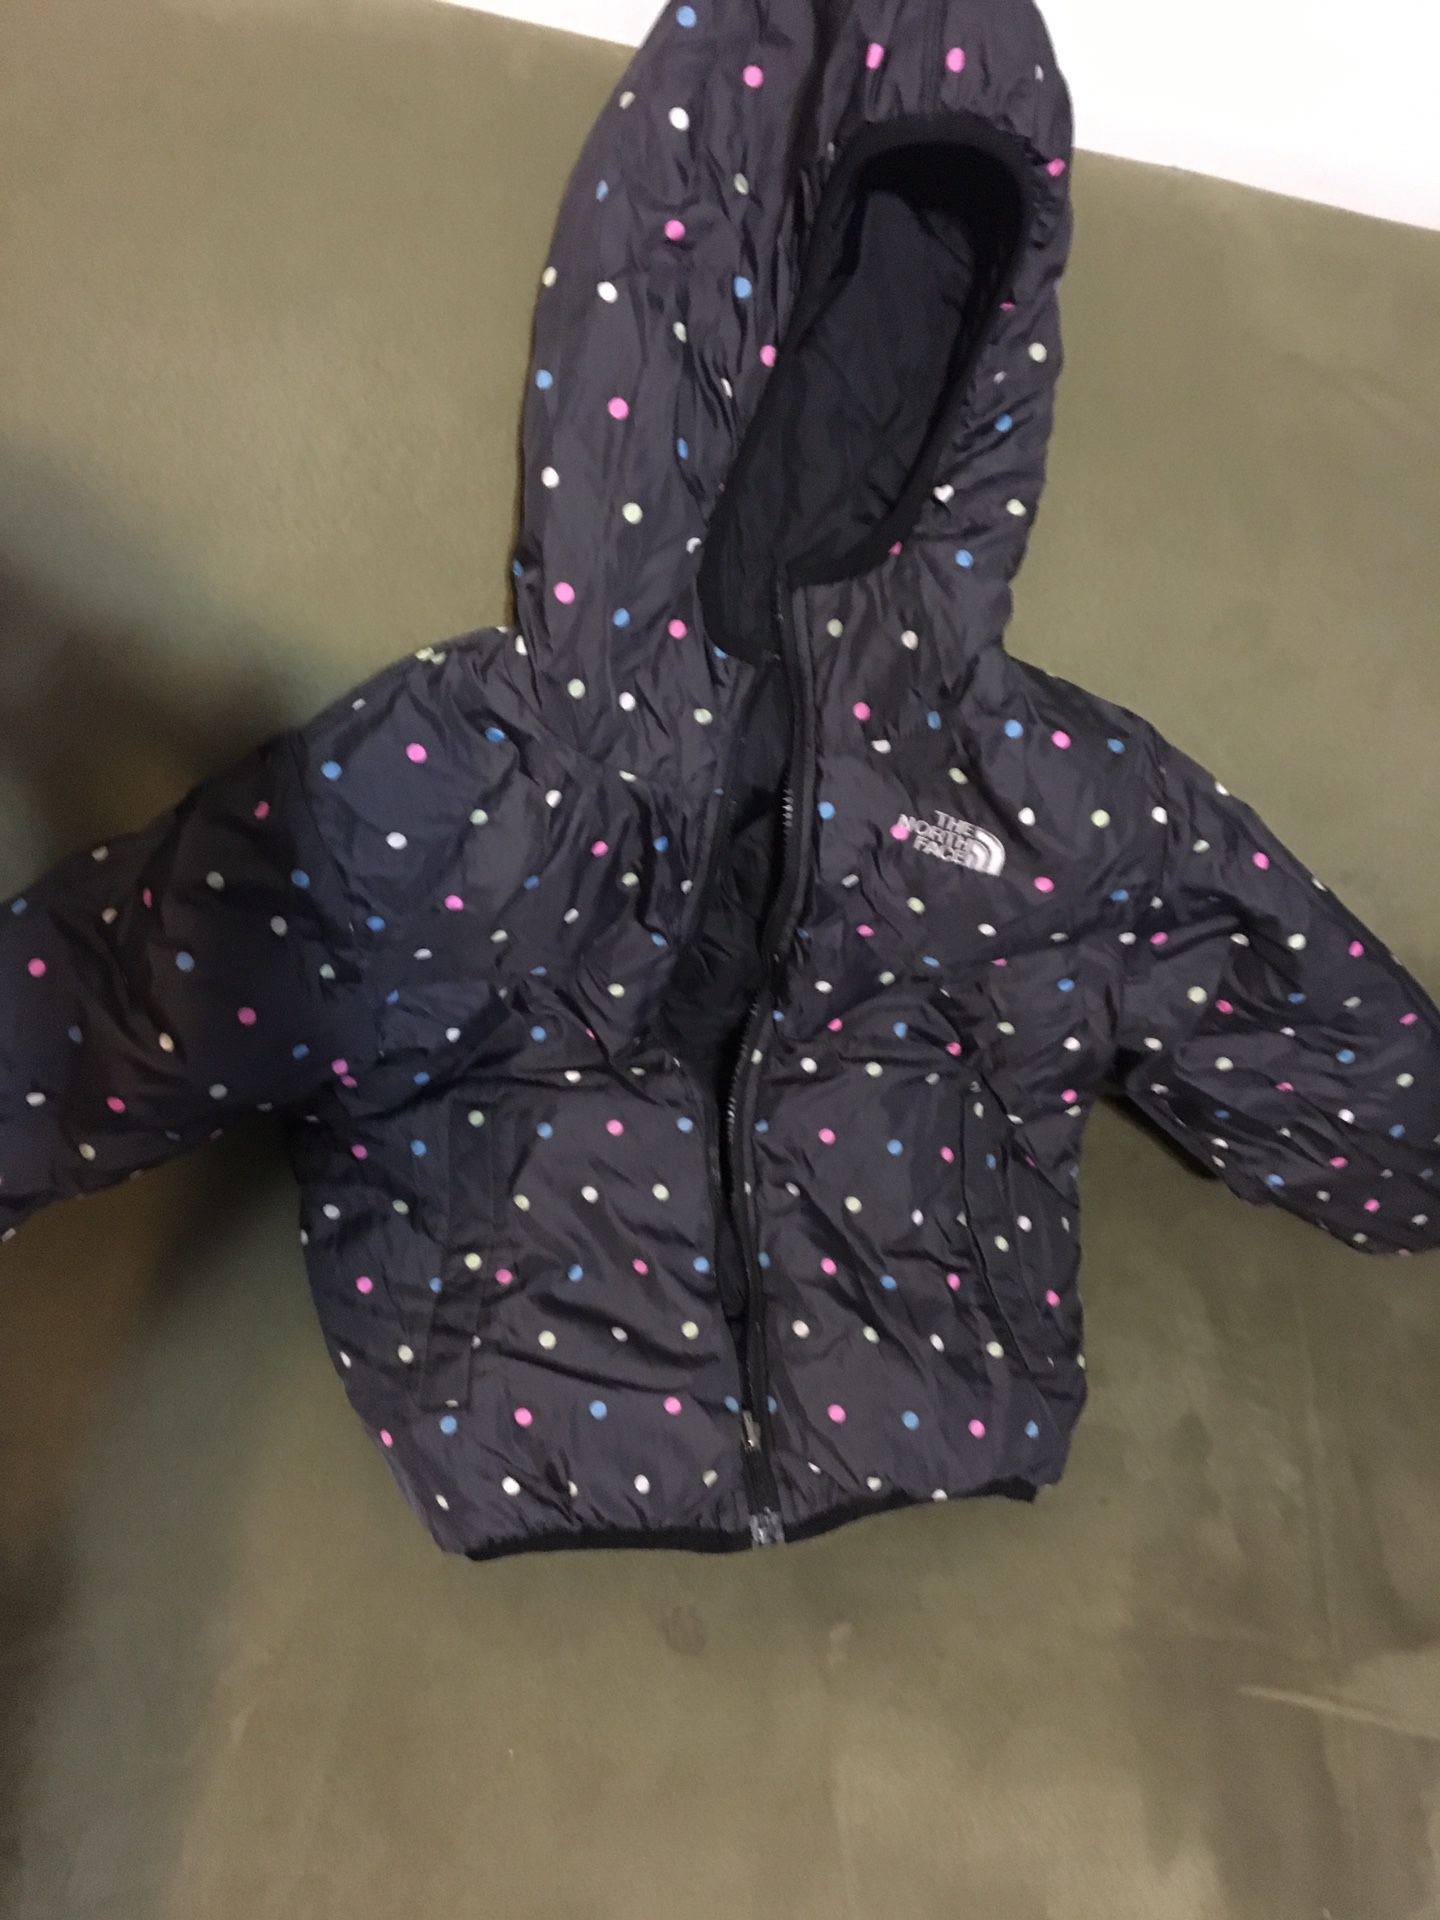 Reversible 3t-4t north face toddlers jacket damaged please read description